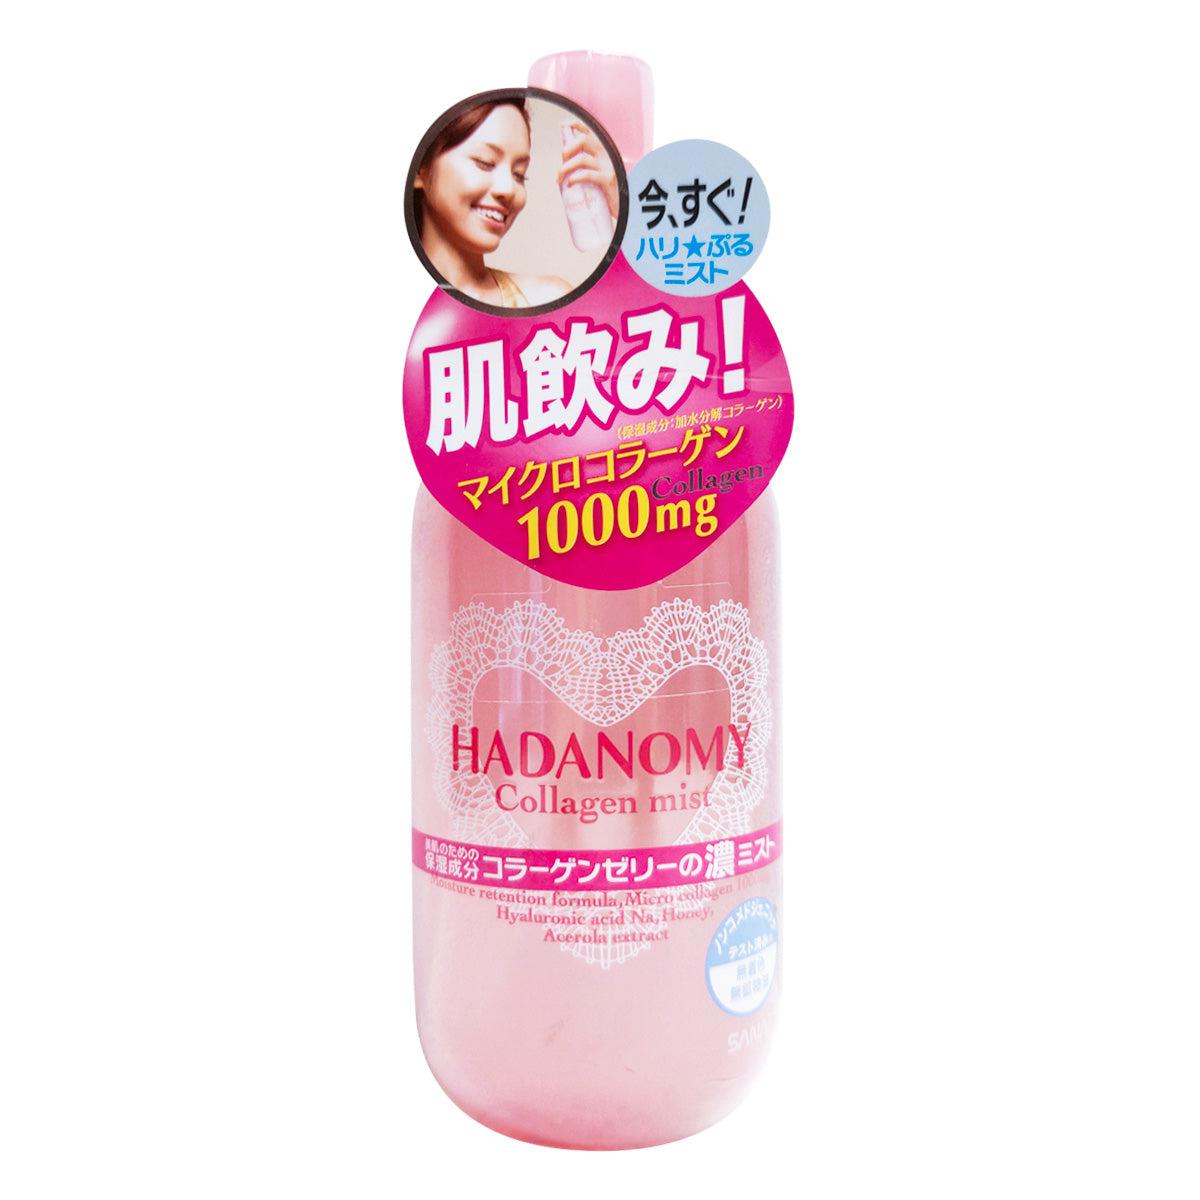 Sana Hadanomy Hydrating Collagen Mist 250ml, Japanese Taste